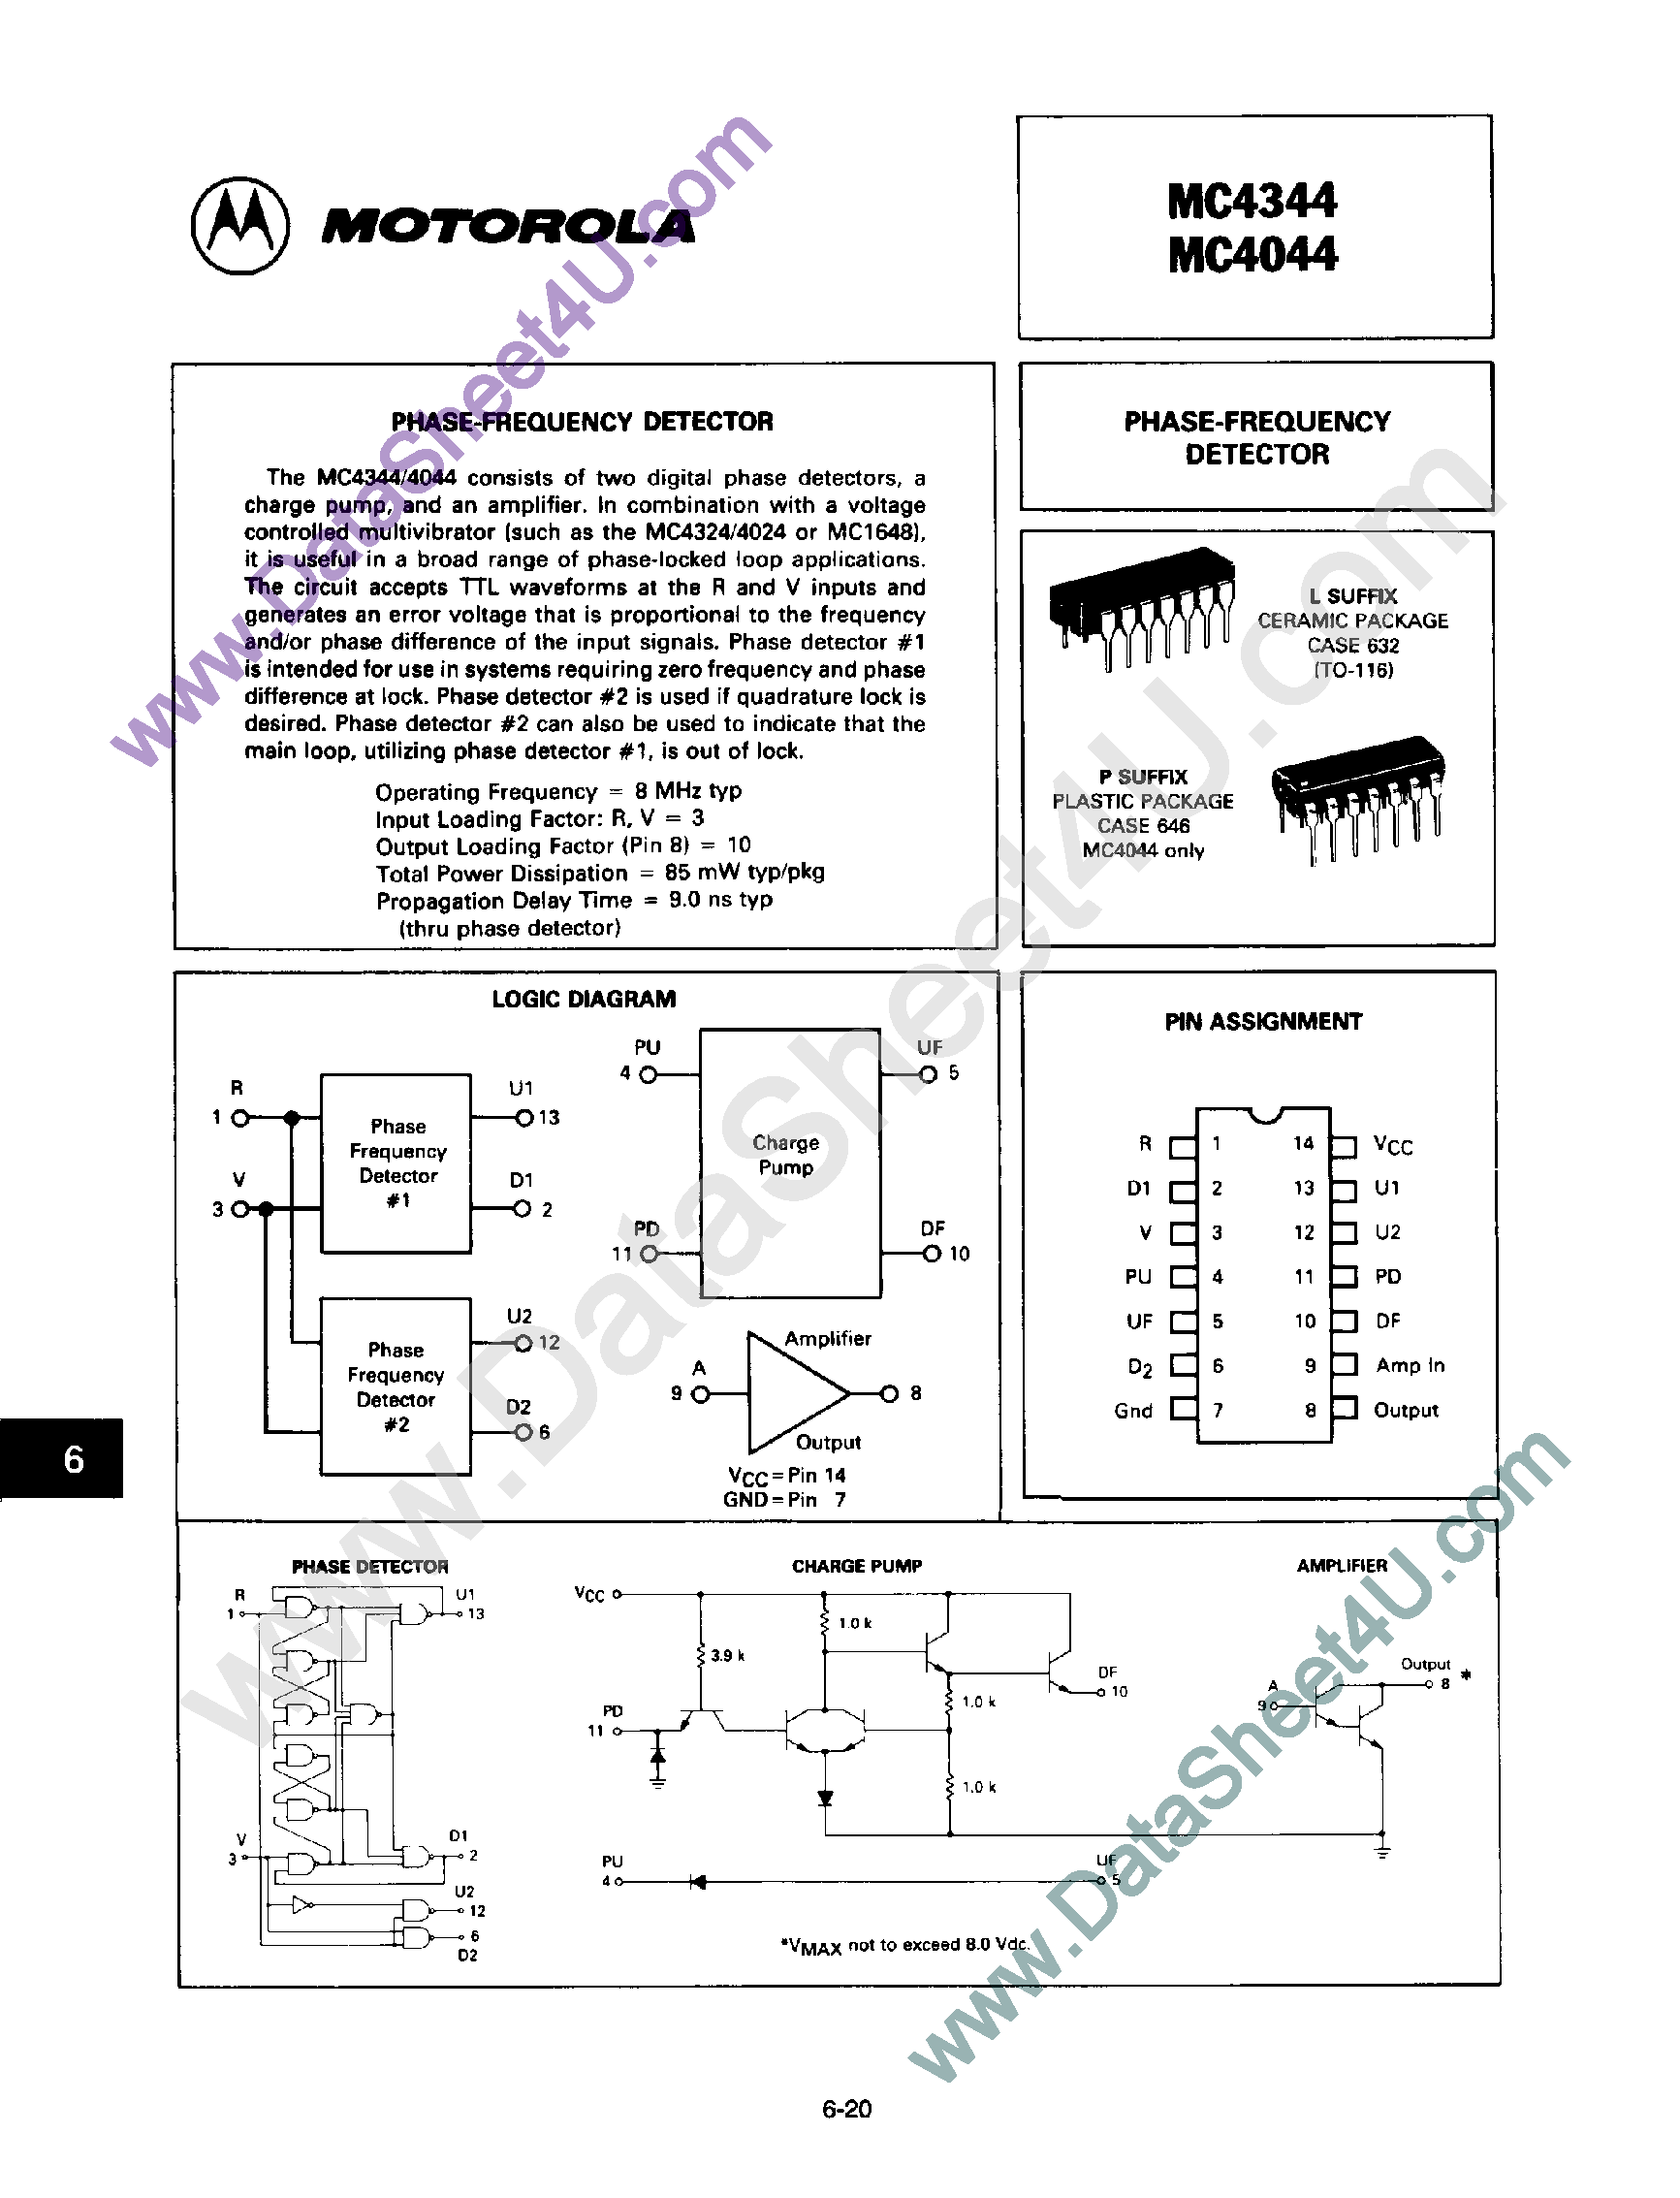 Datasheet MC4044 - (MC4344 / MC4044) Phase Frequency Detector page 1